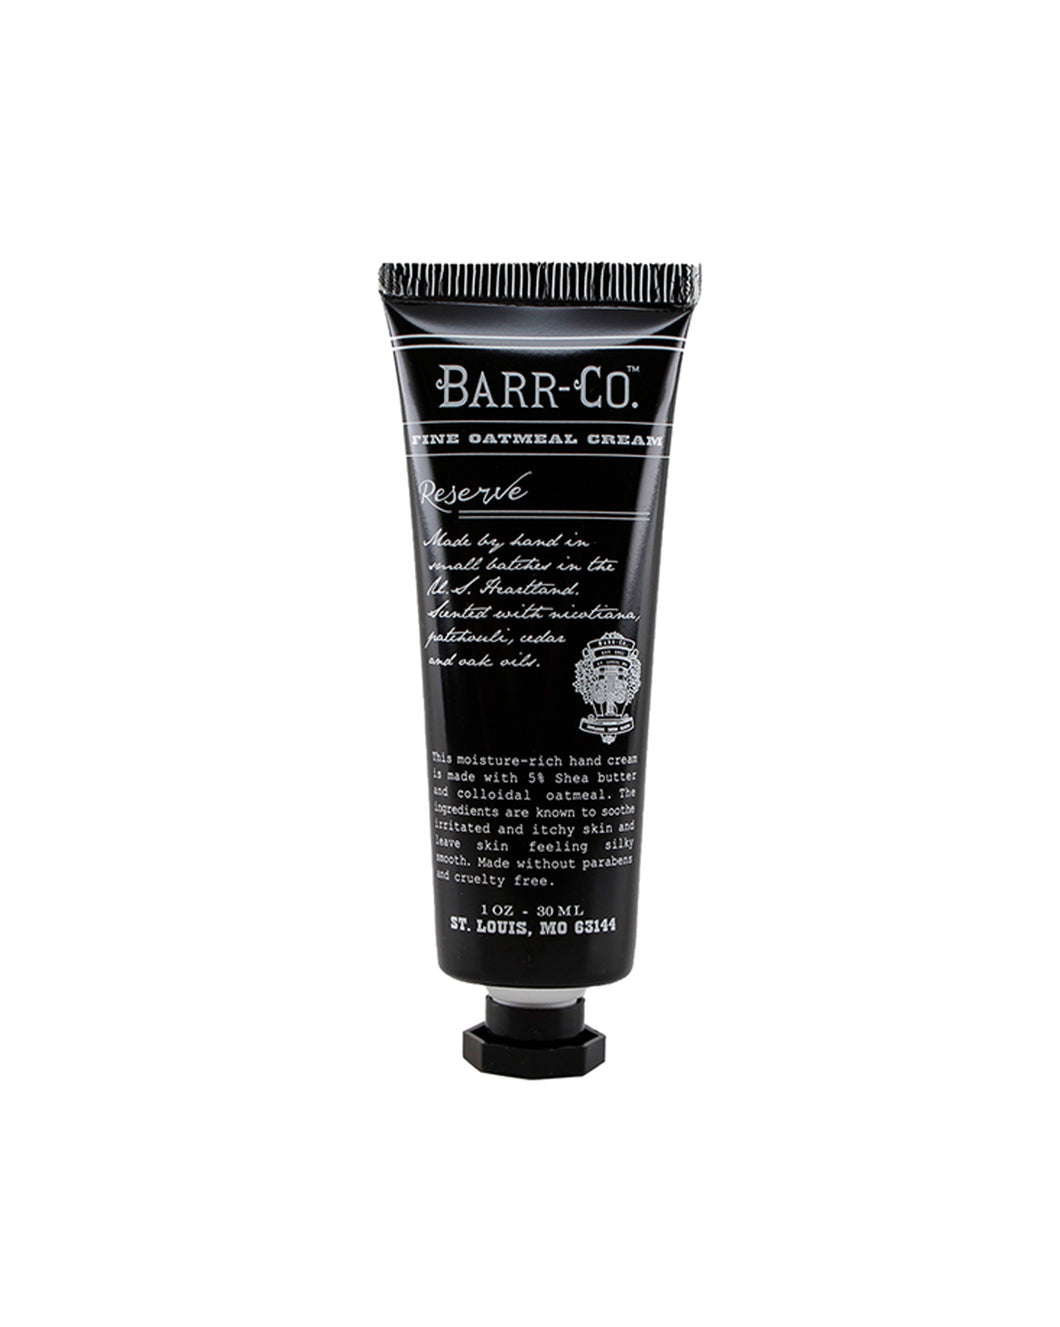 Barr-Co. Reserve Hand Cream